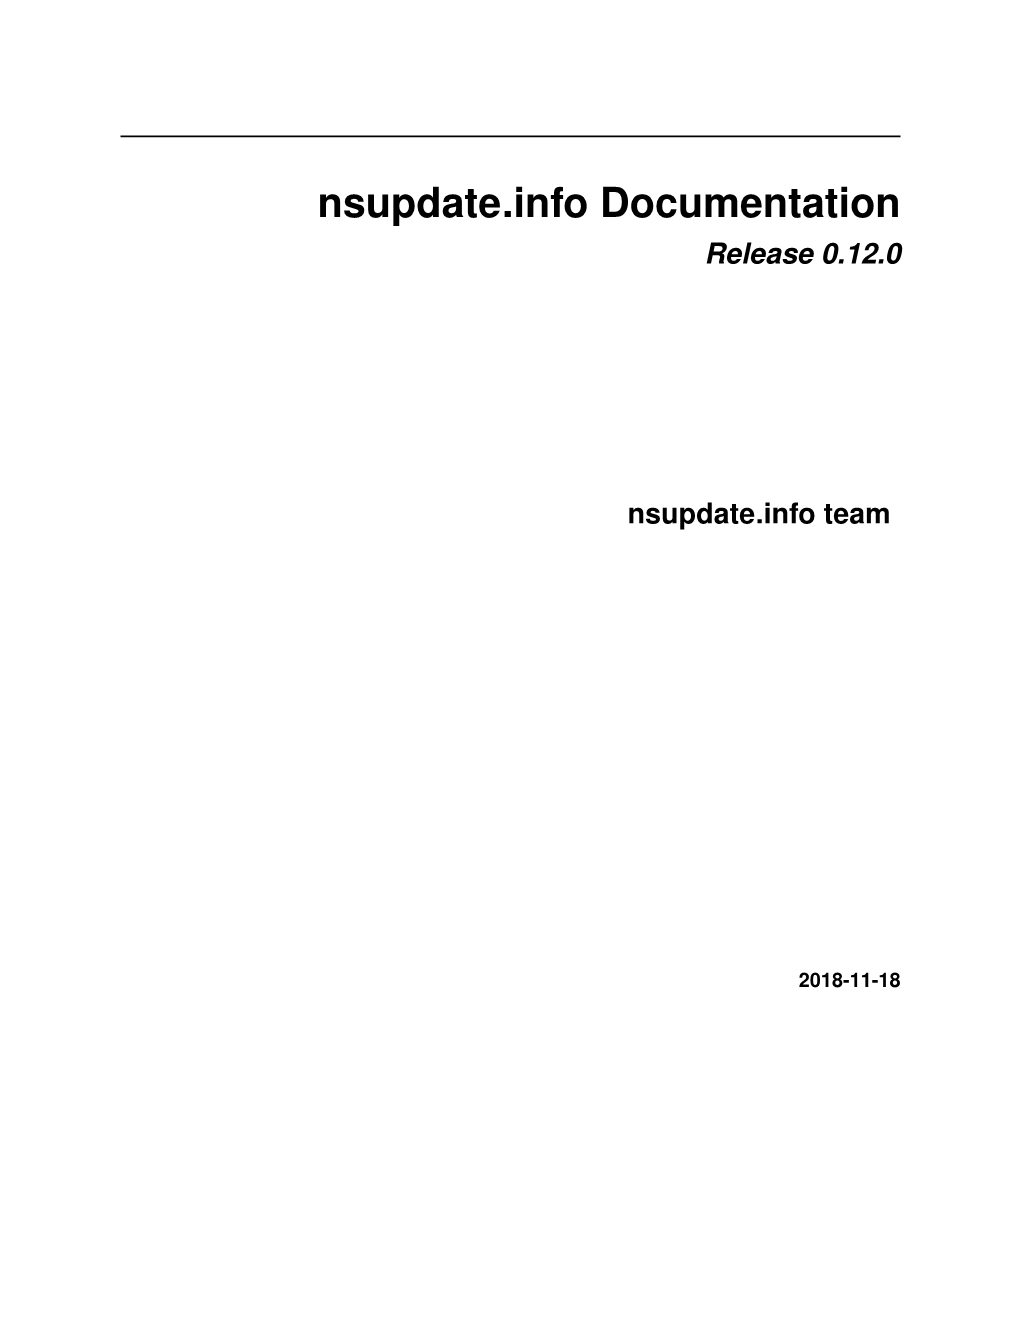 Nsupdate.Info Documentation Release 0.12.0